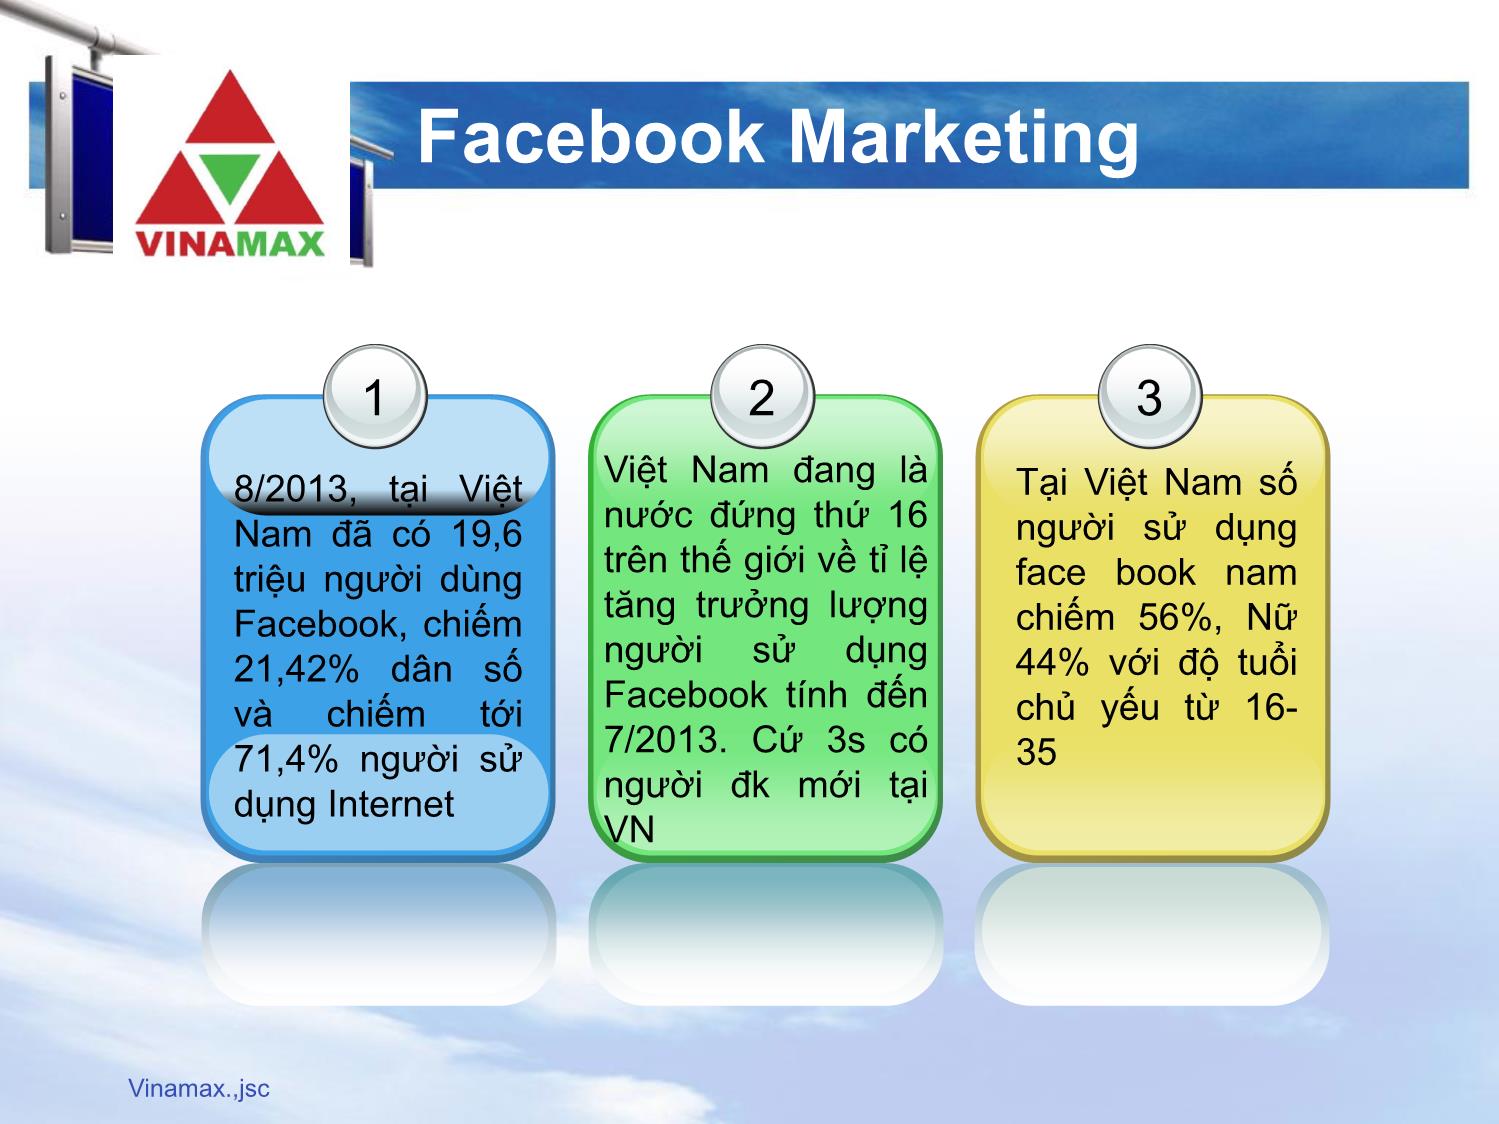 Facebook Marketing trang 3